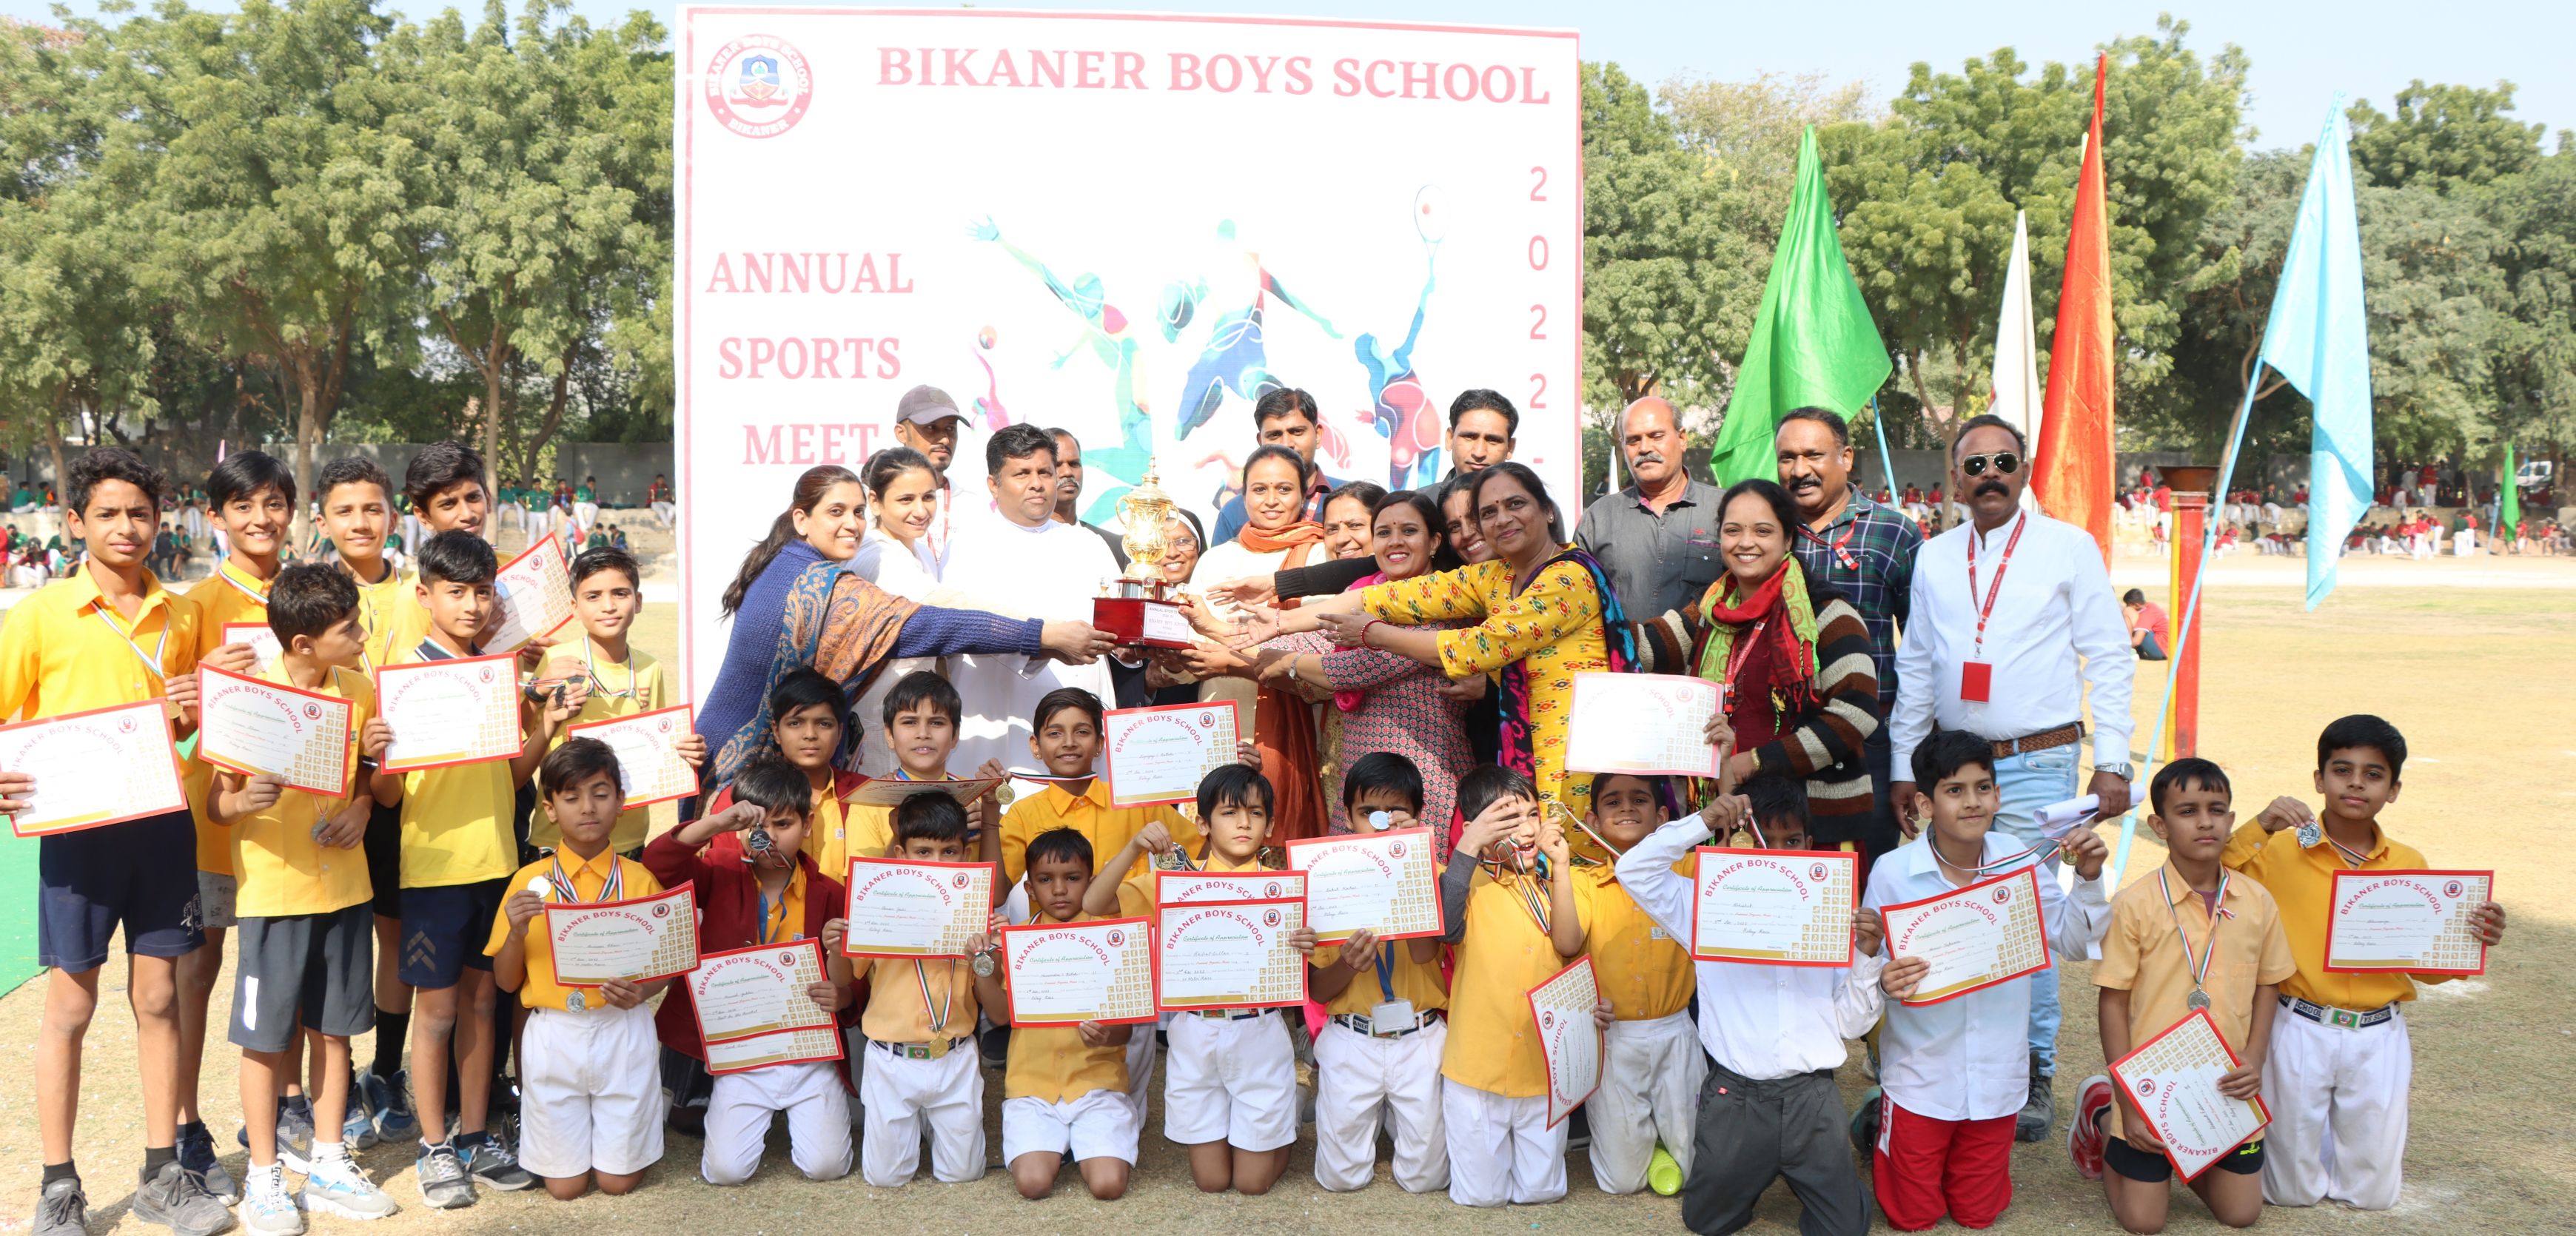 Bikaner Boys School